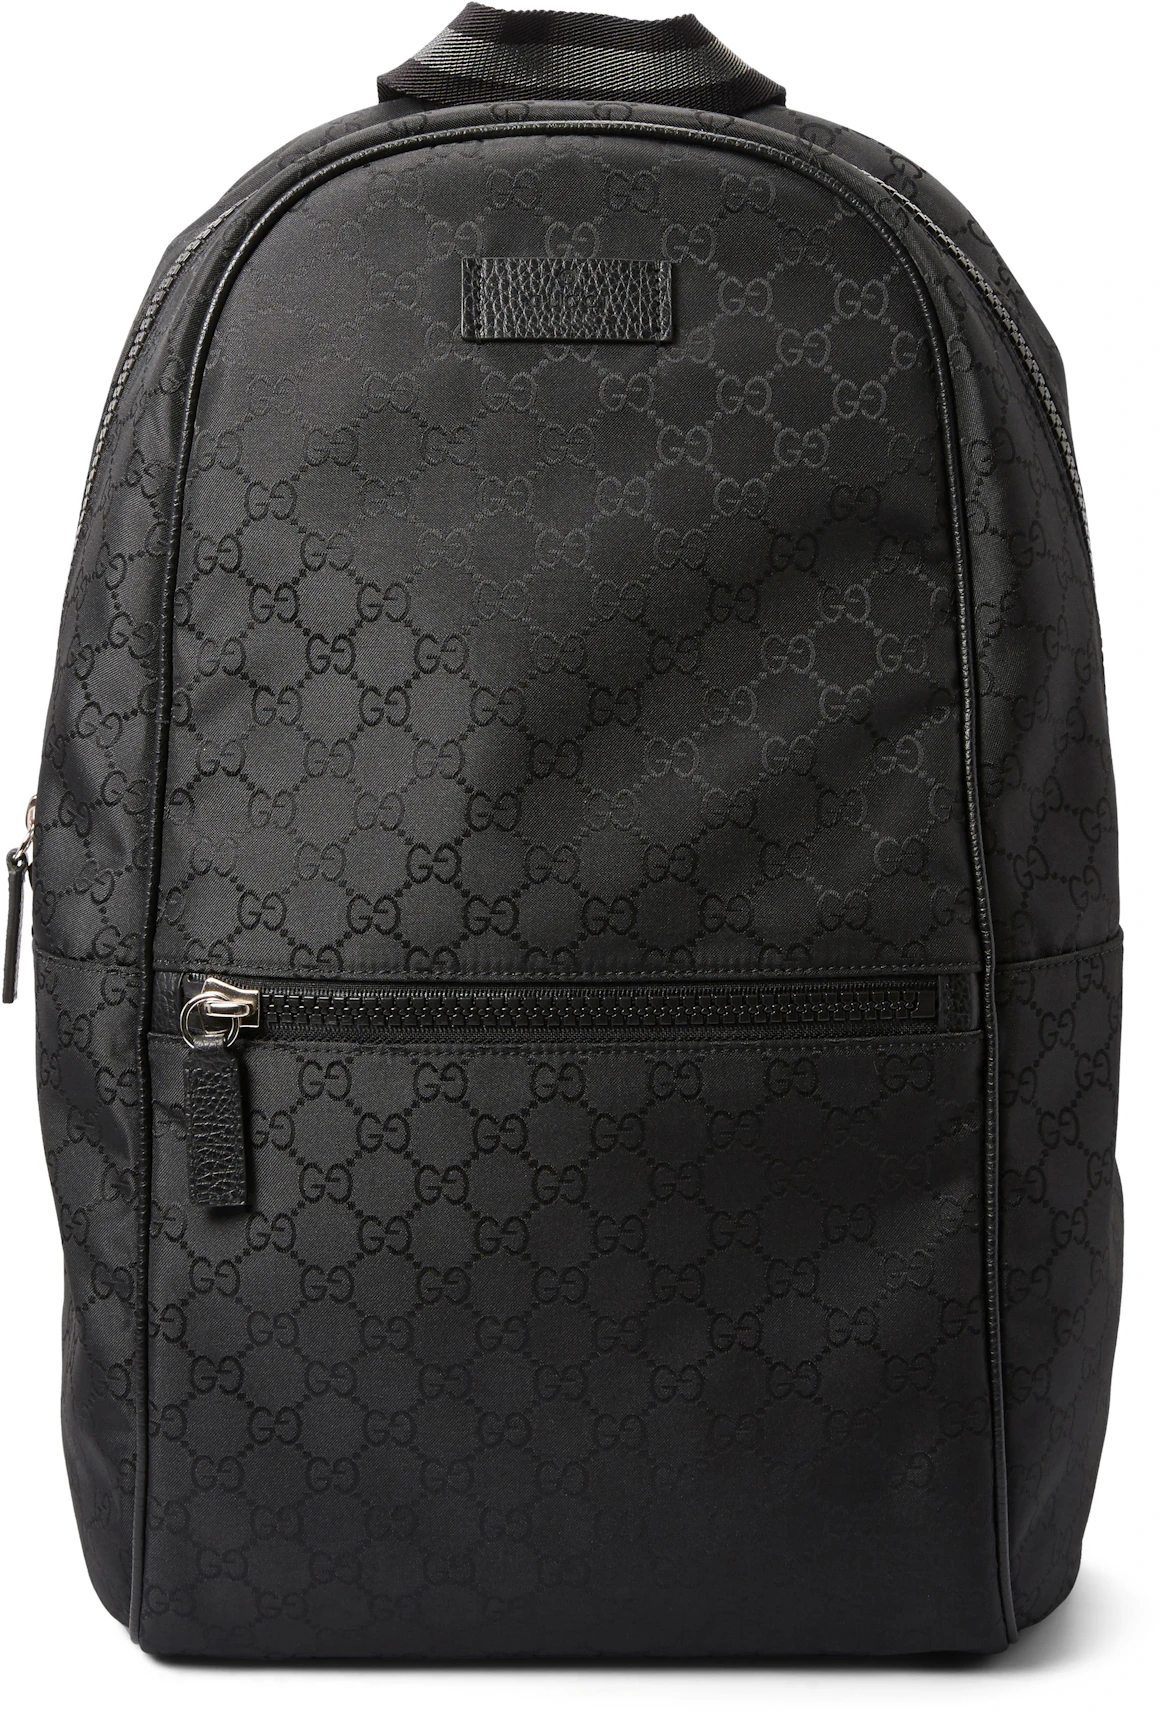 Gucci Slim Backpack GG Black - US